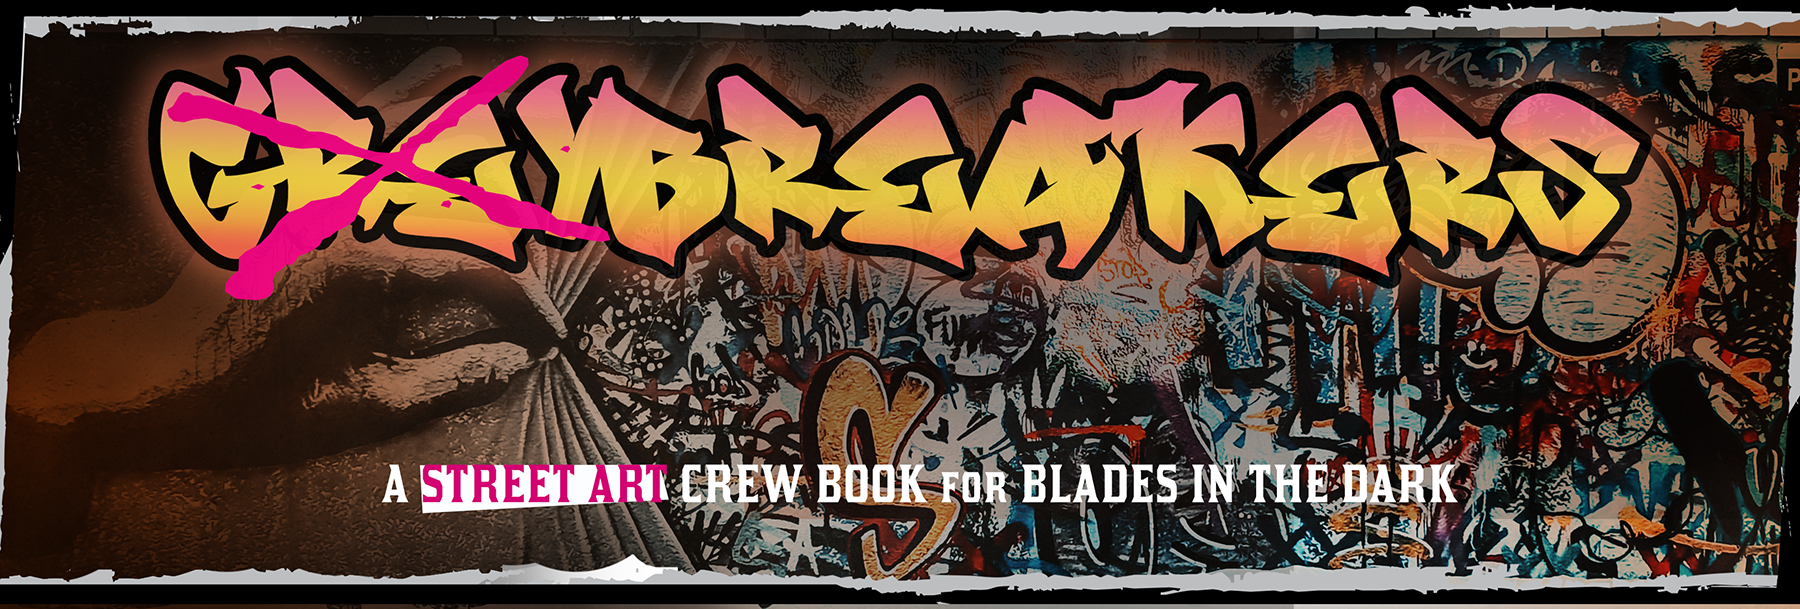 Blades in the Dark Crew Book: Greybreakers